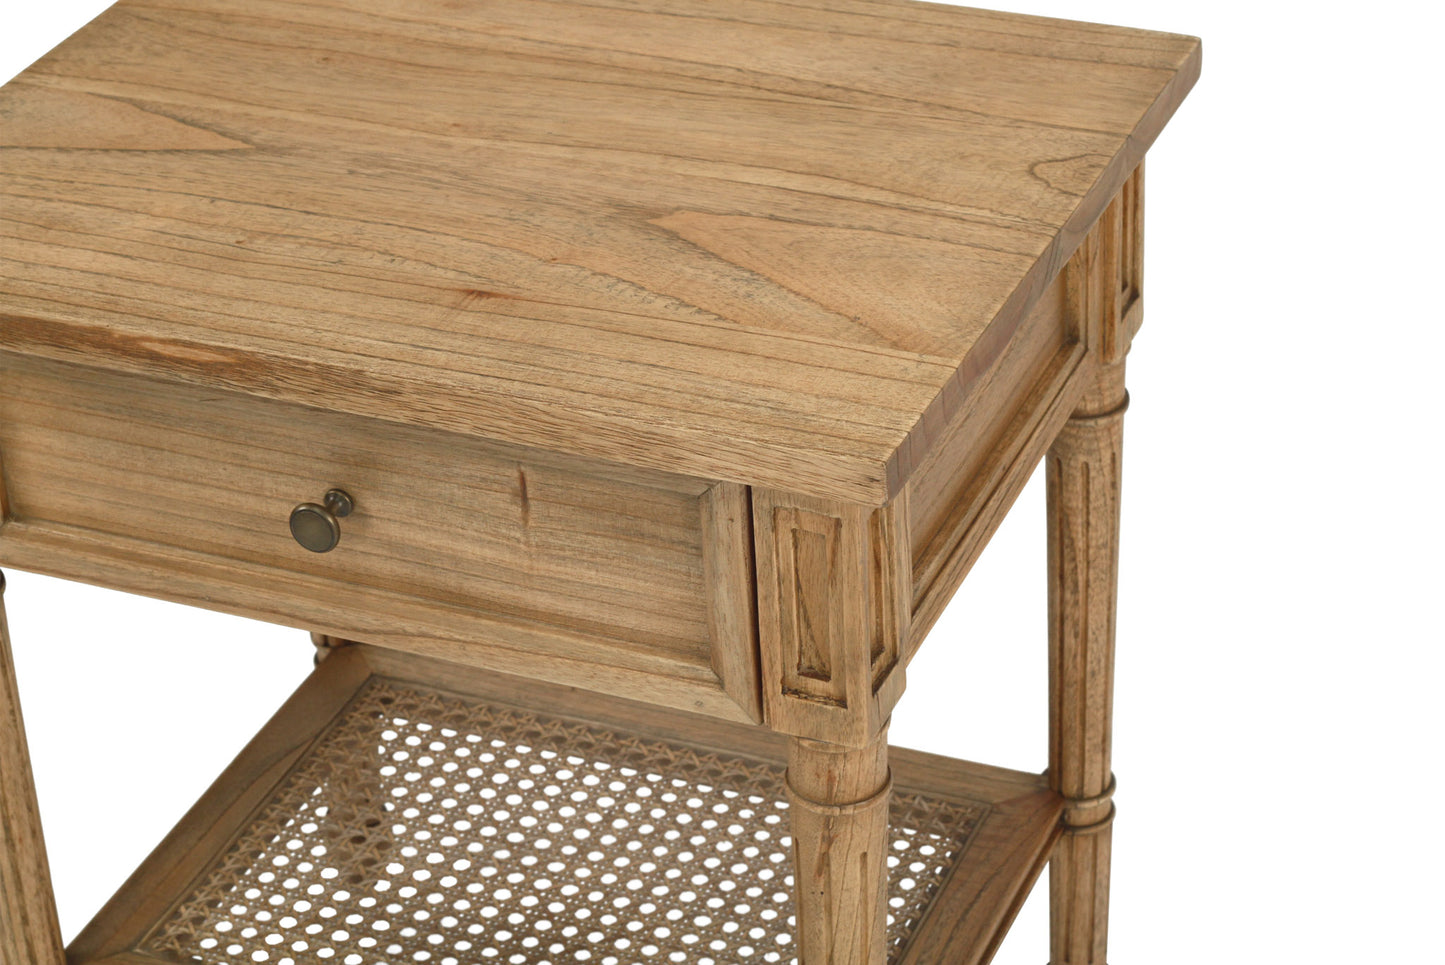 Walton Bedside Table - 1 Drawer